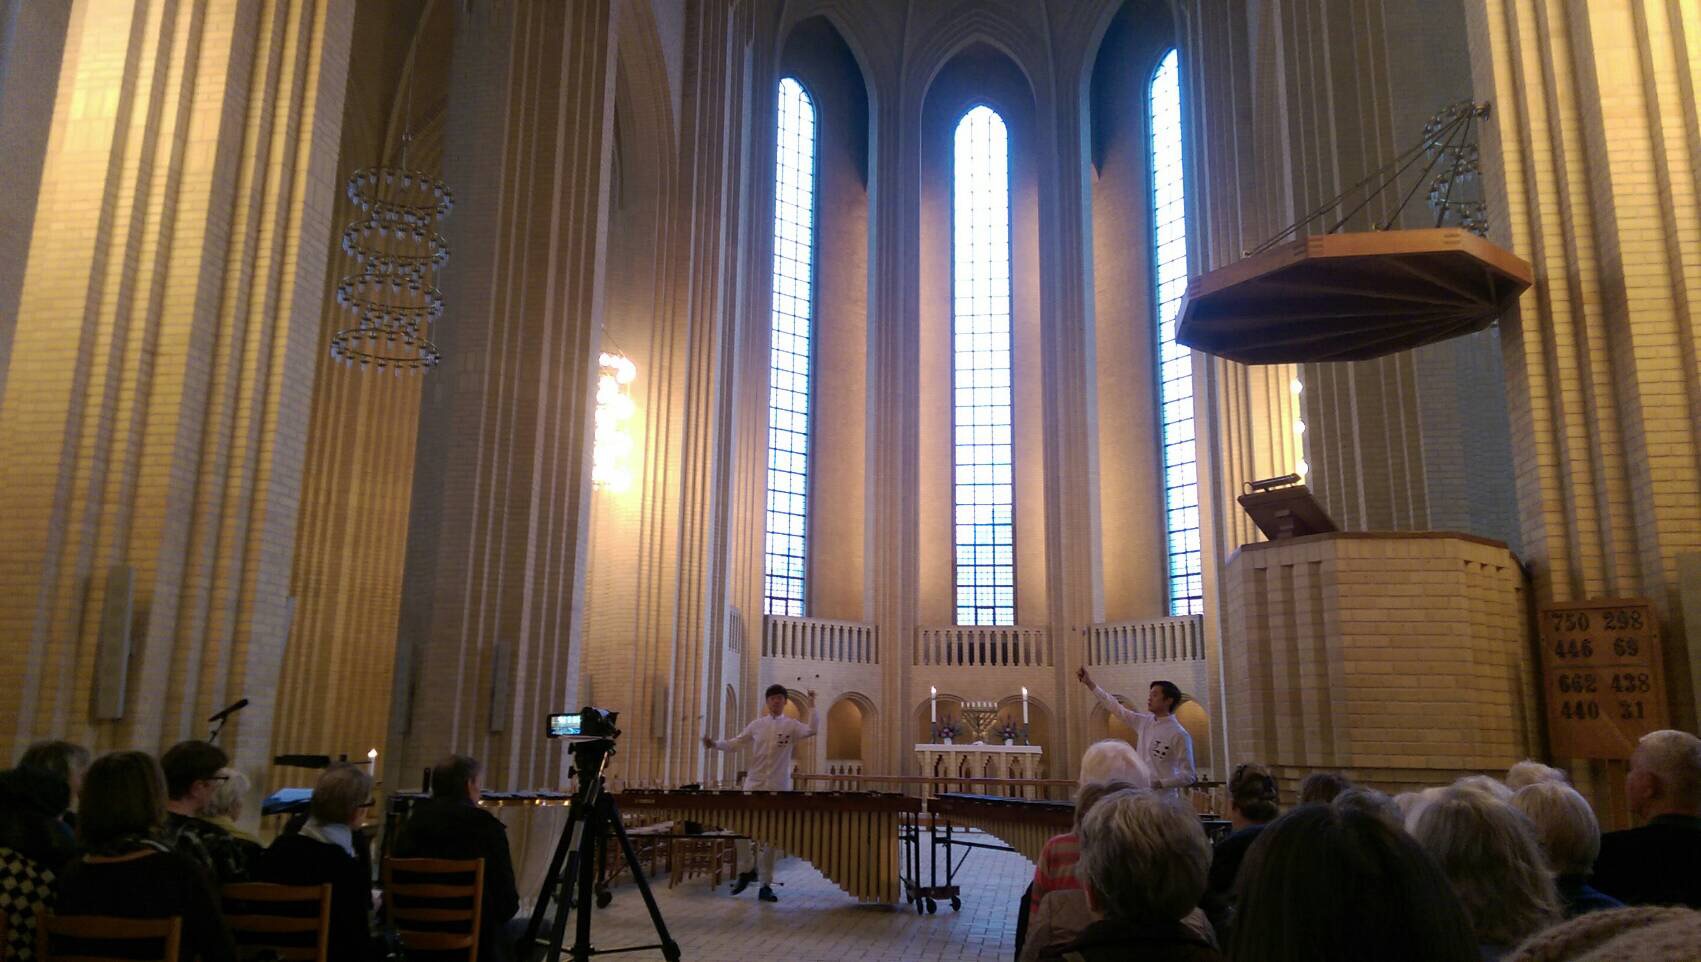 Concert in Grundsvig Church, Denmark